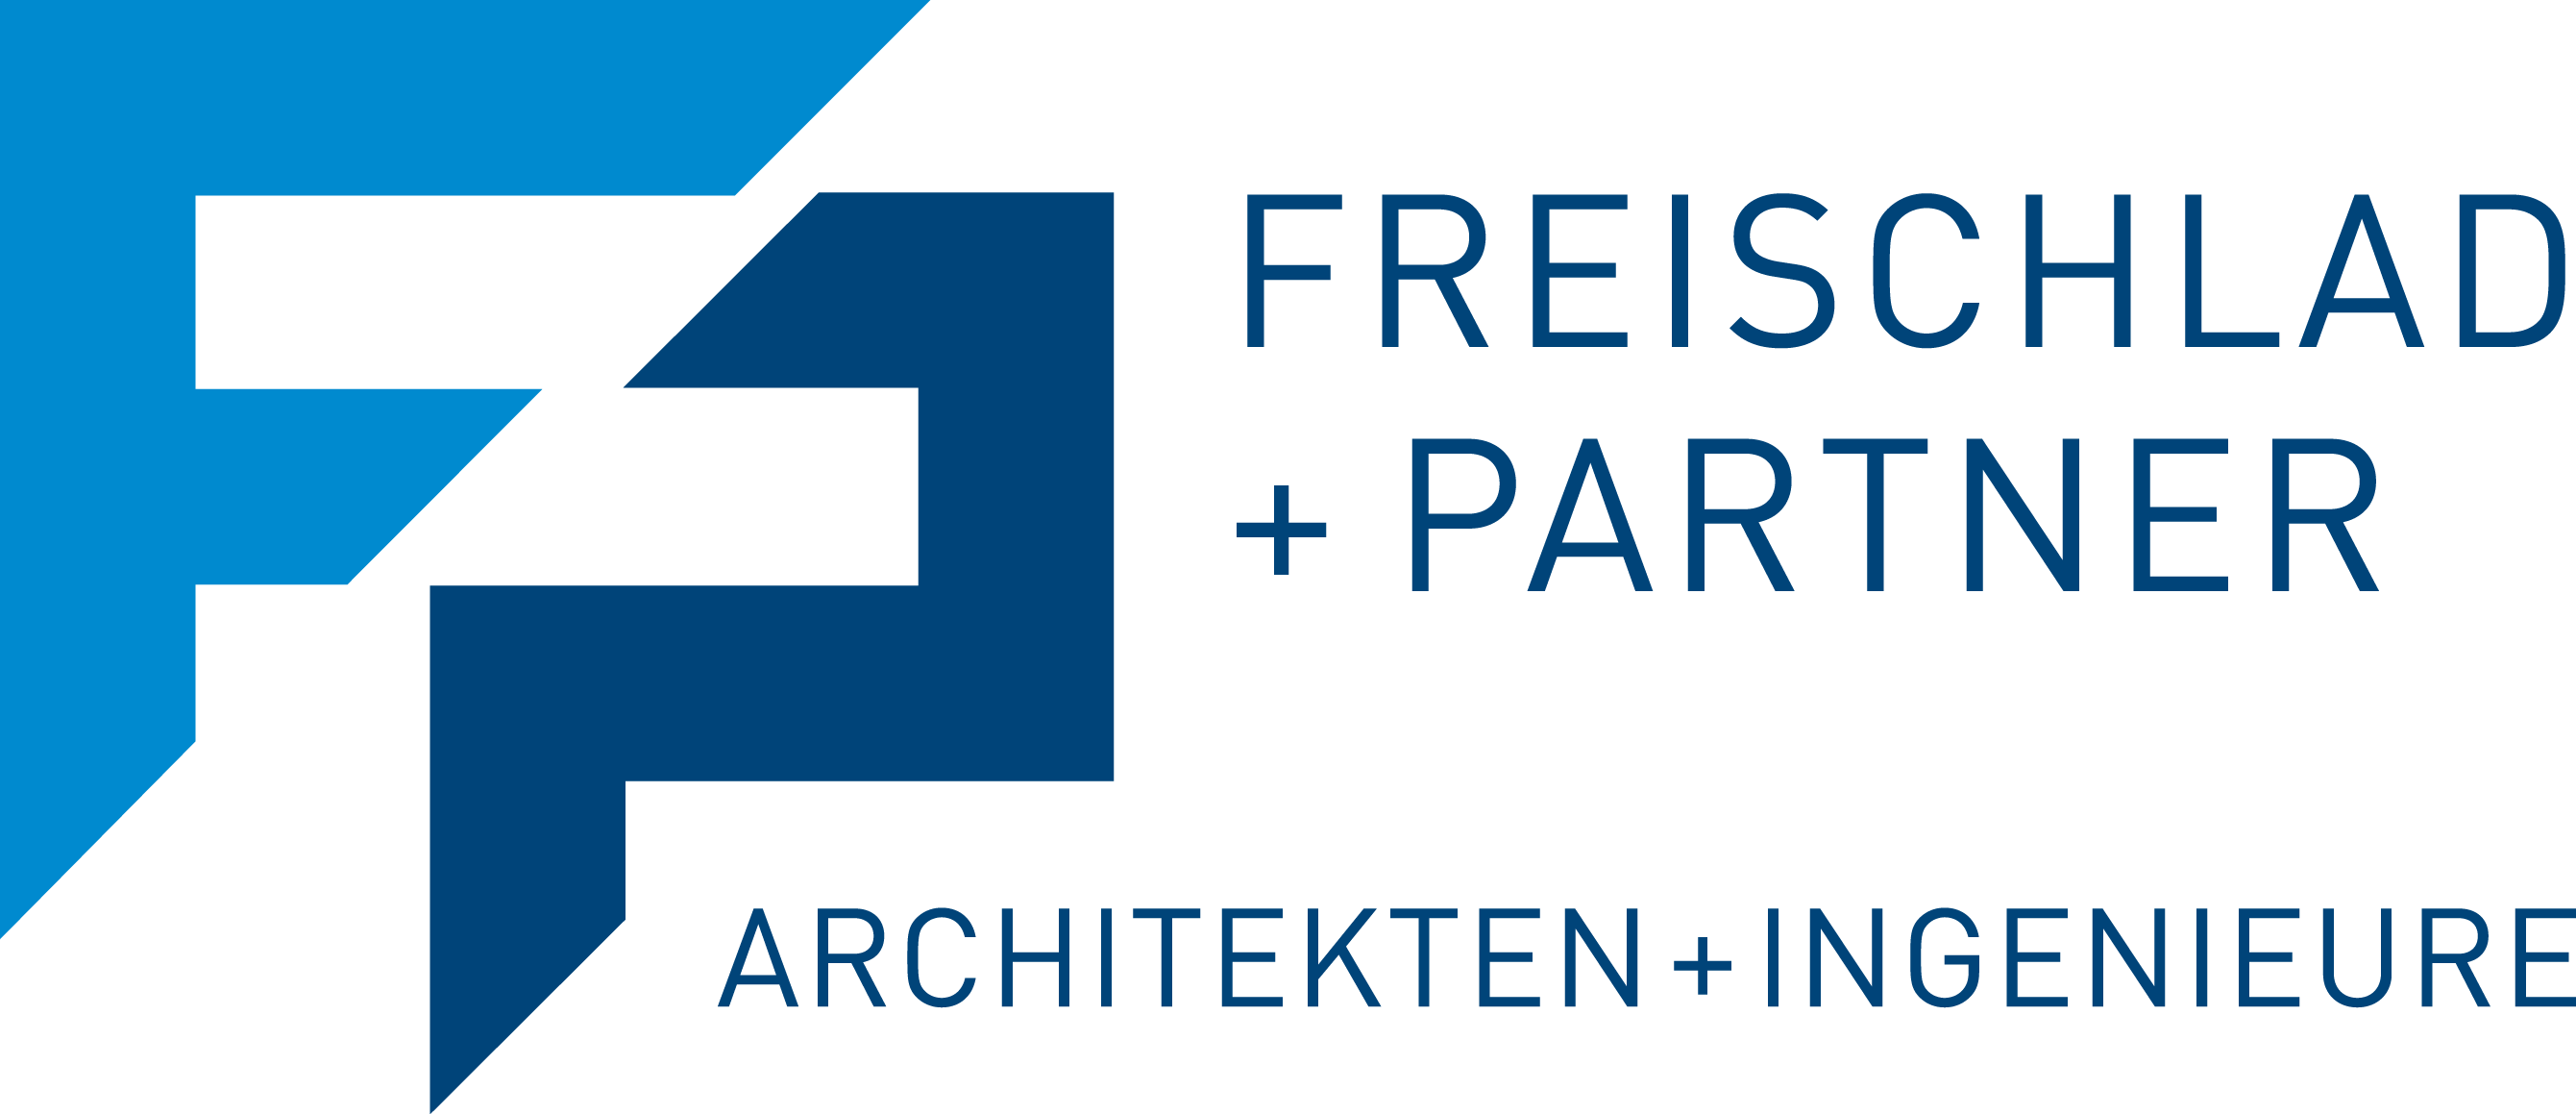 Freischlad & Partner logo